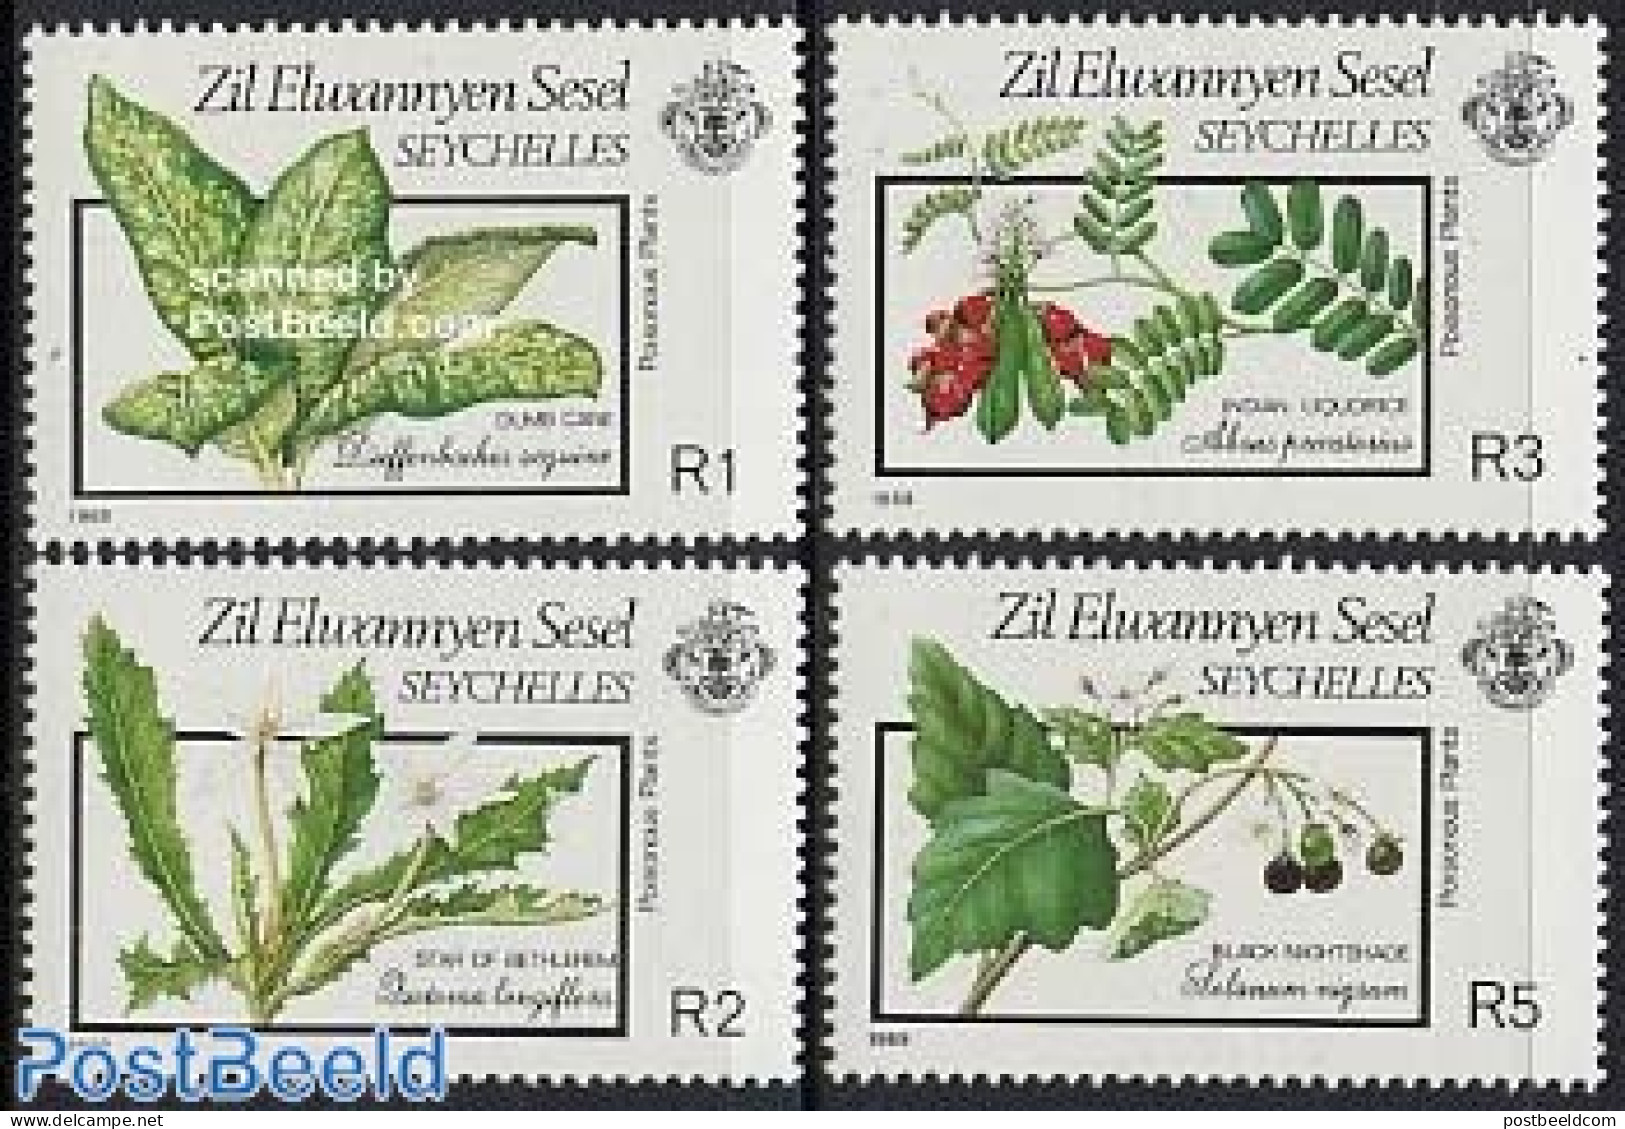 Seychelles, Zil Eloigne Sesel 1989 Poisened Plants 4v, Mint NH, Nature - Flowers & Plants - Seychelles (1976-...)